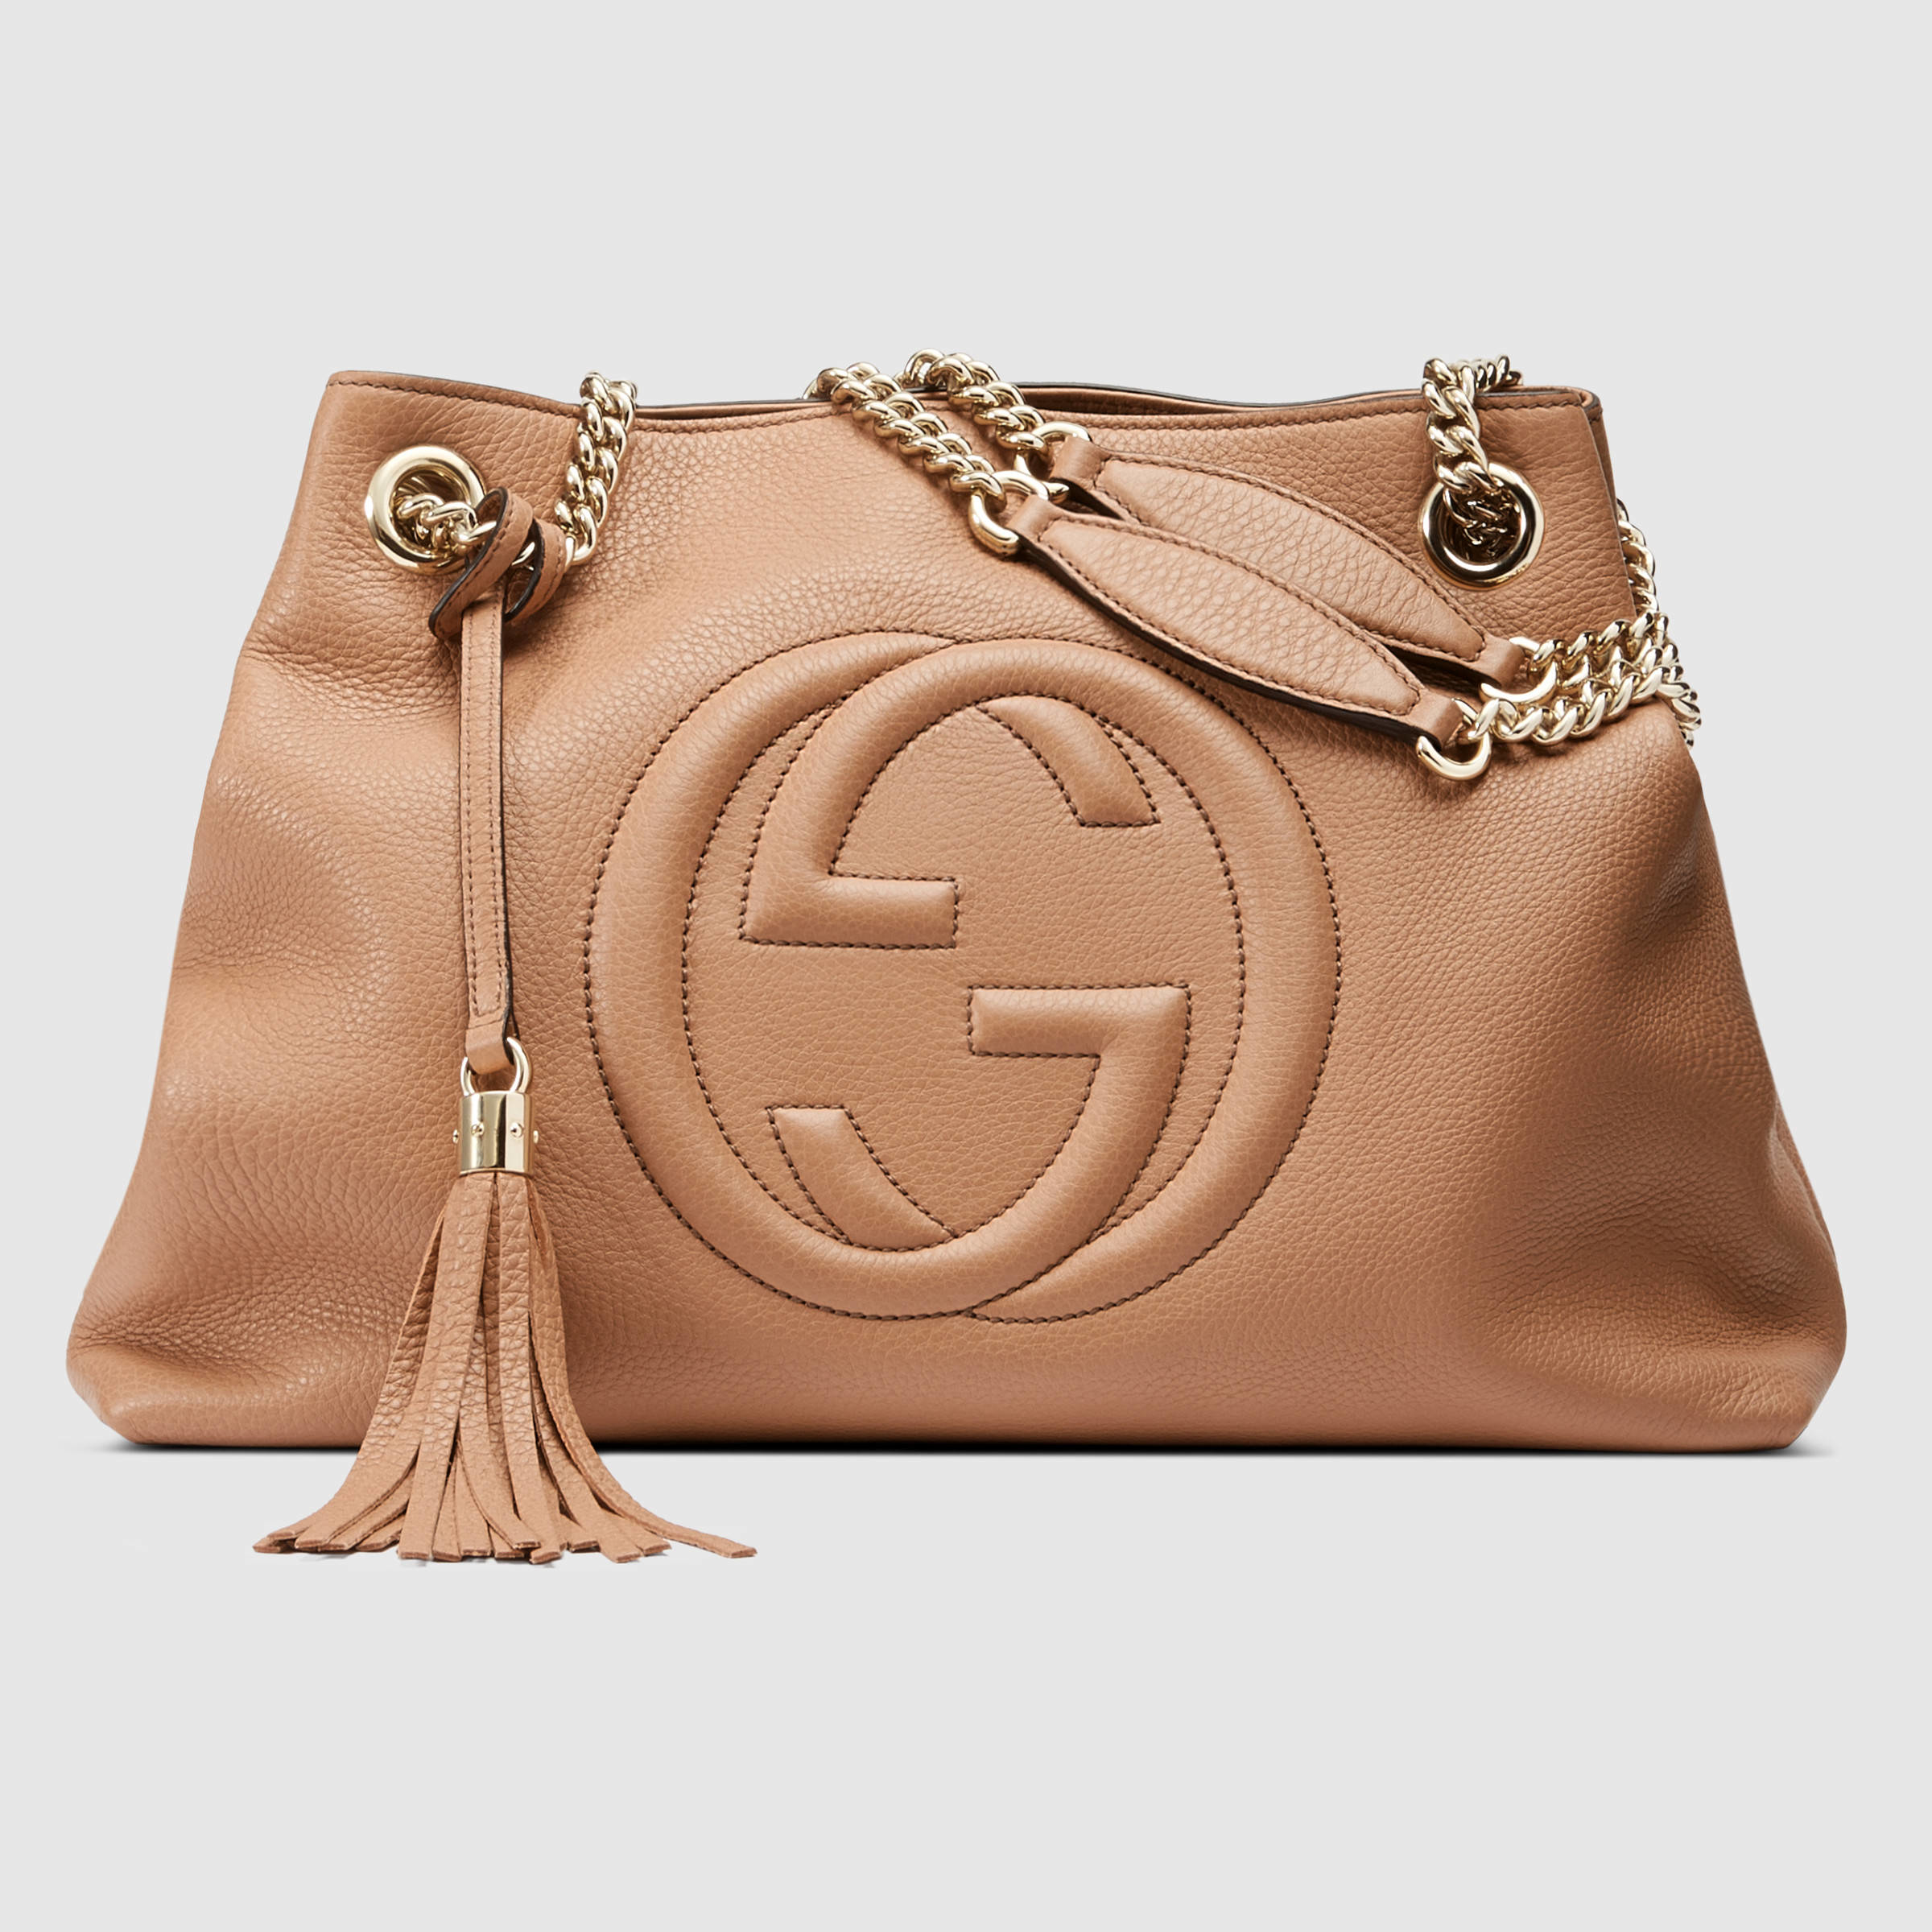 Gucci Soho Leather Shoulder Bag in Natural - Lyst